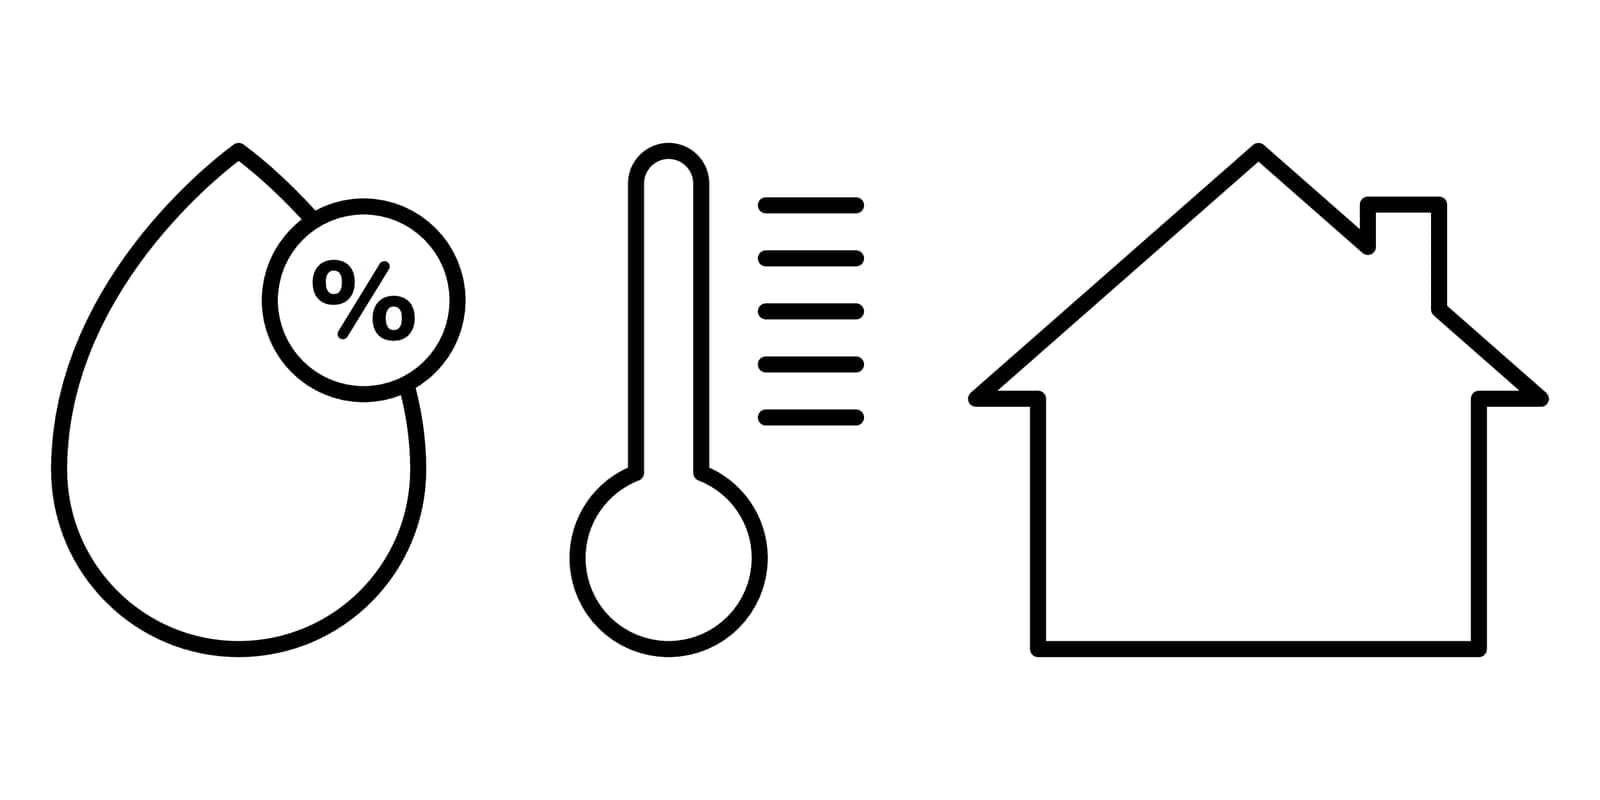 Temperature control house icon set